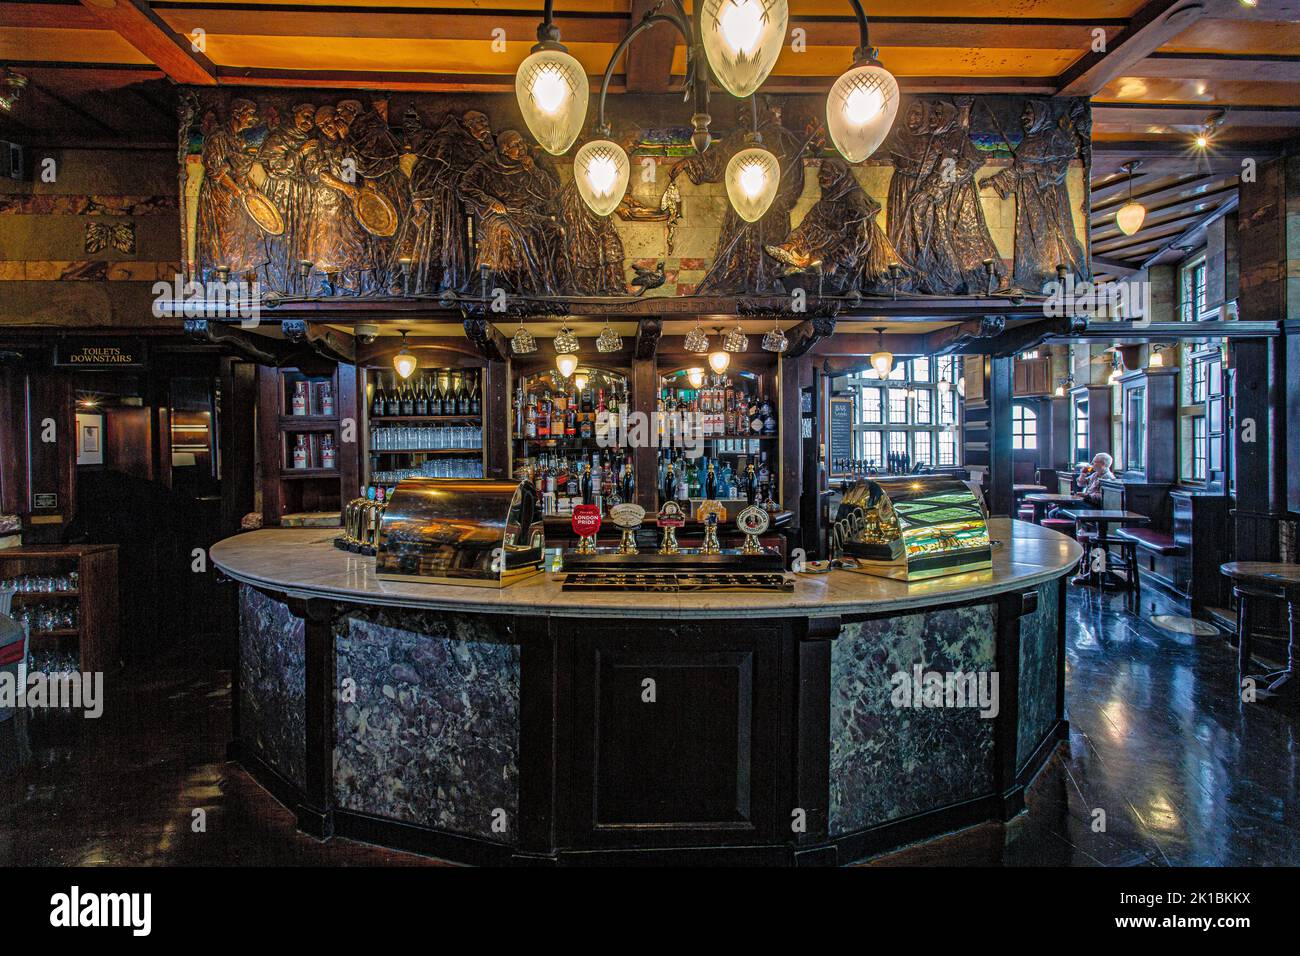 The Blackfriar Pub Interior , Blackfriars, Londres, Angleterre. Banque D'Images